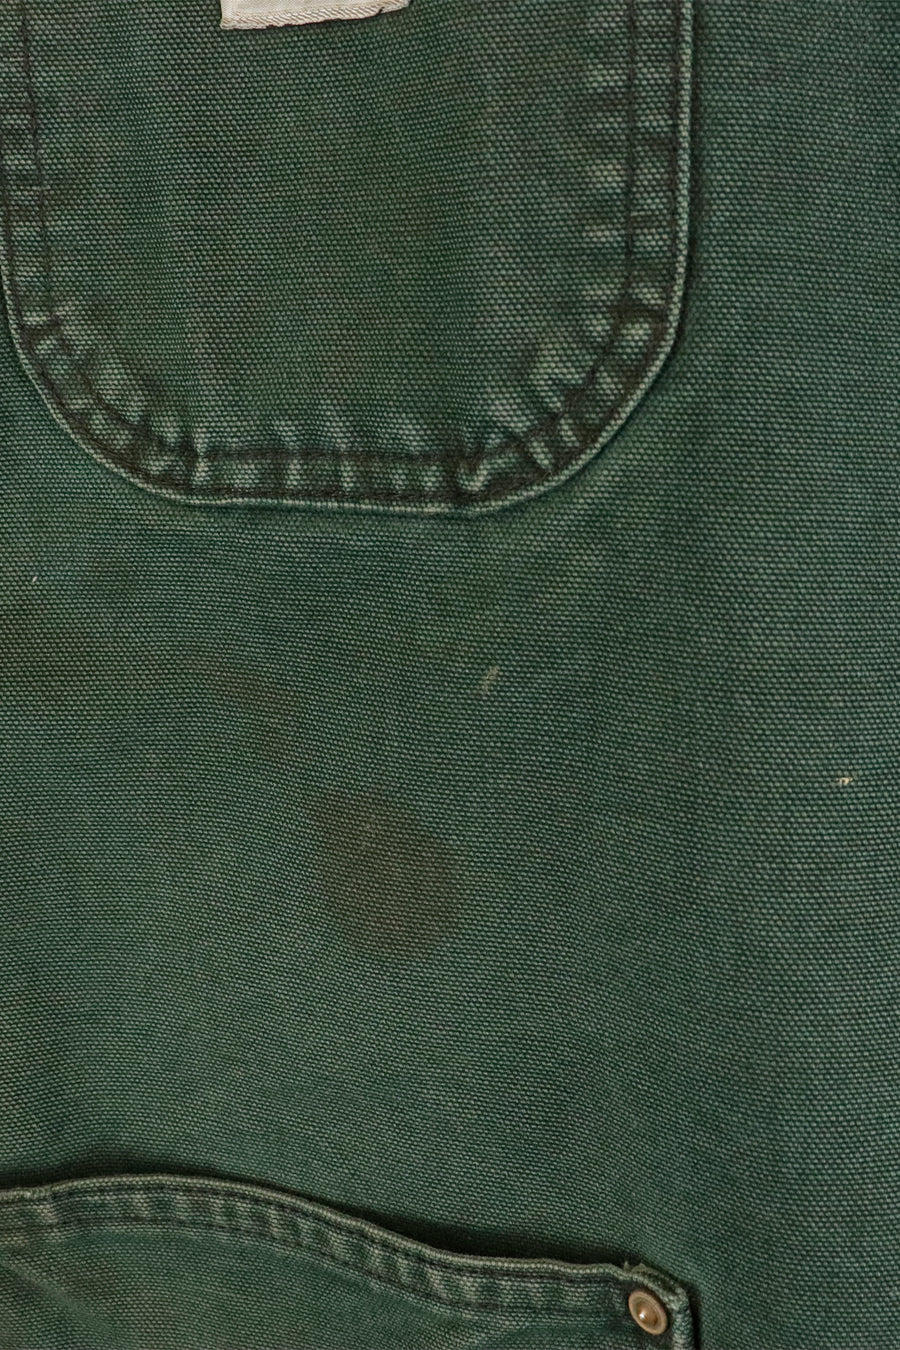 Vintage Carhartt Blanket Lined Chore Green Denim Collared Jacket Sz 2XL